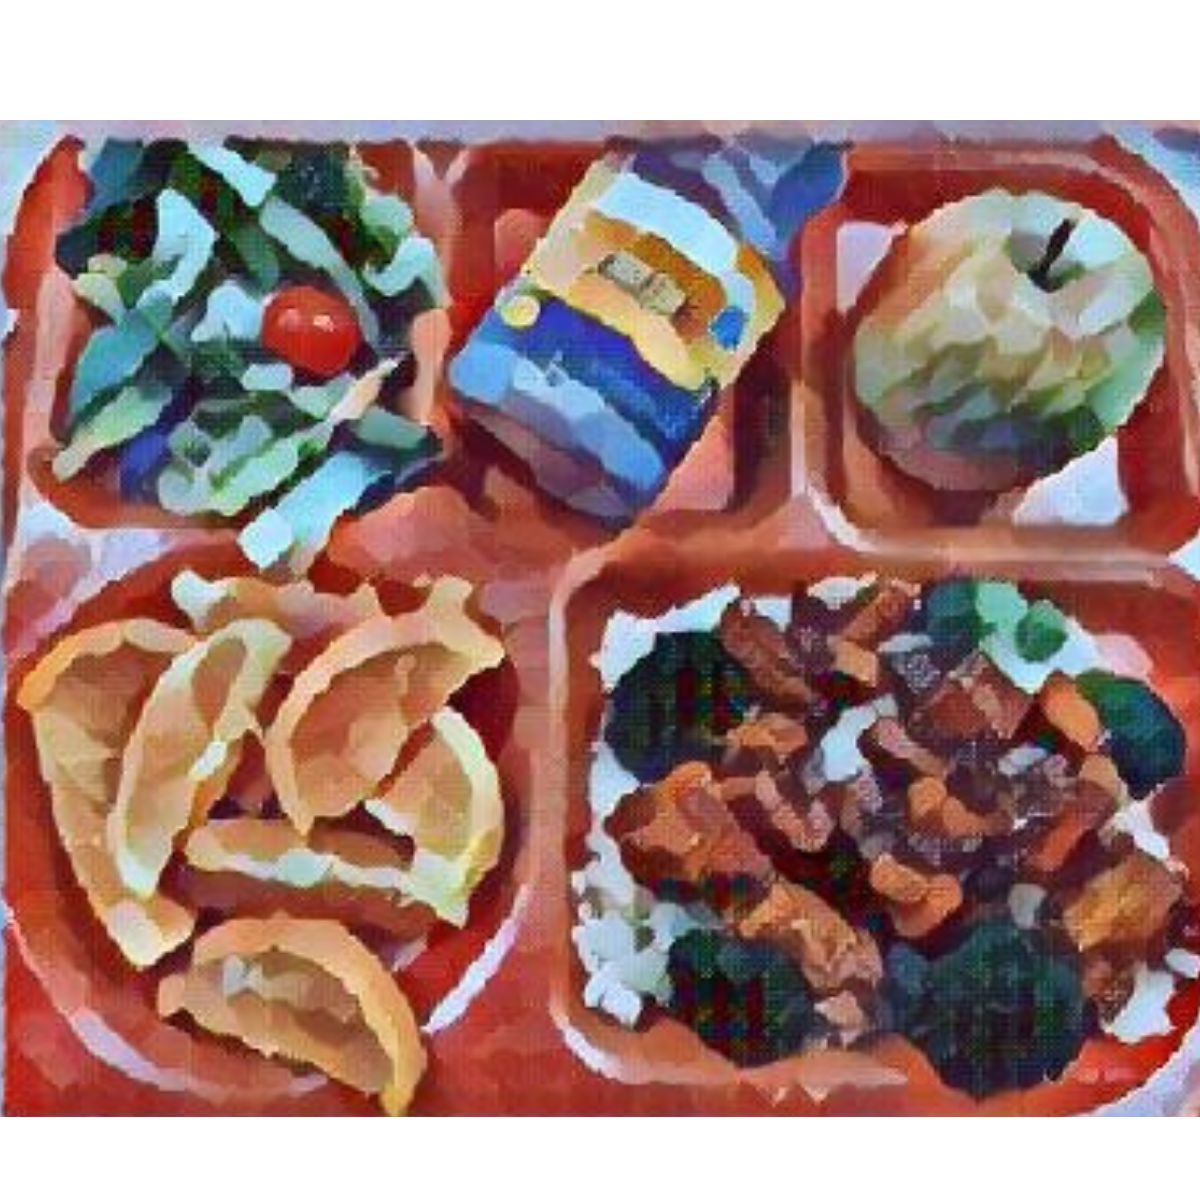 Meal Tray picture orange chicken over rice salad milk apple oranges